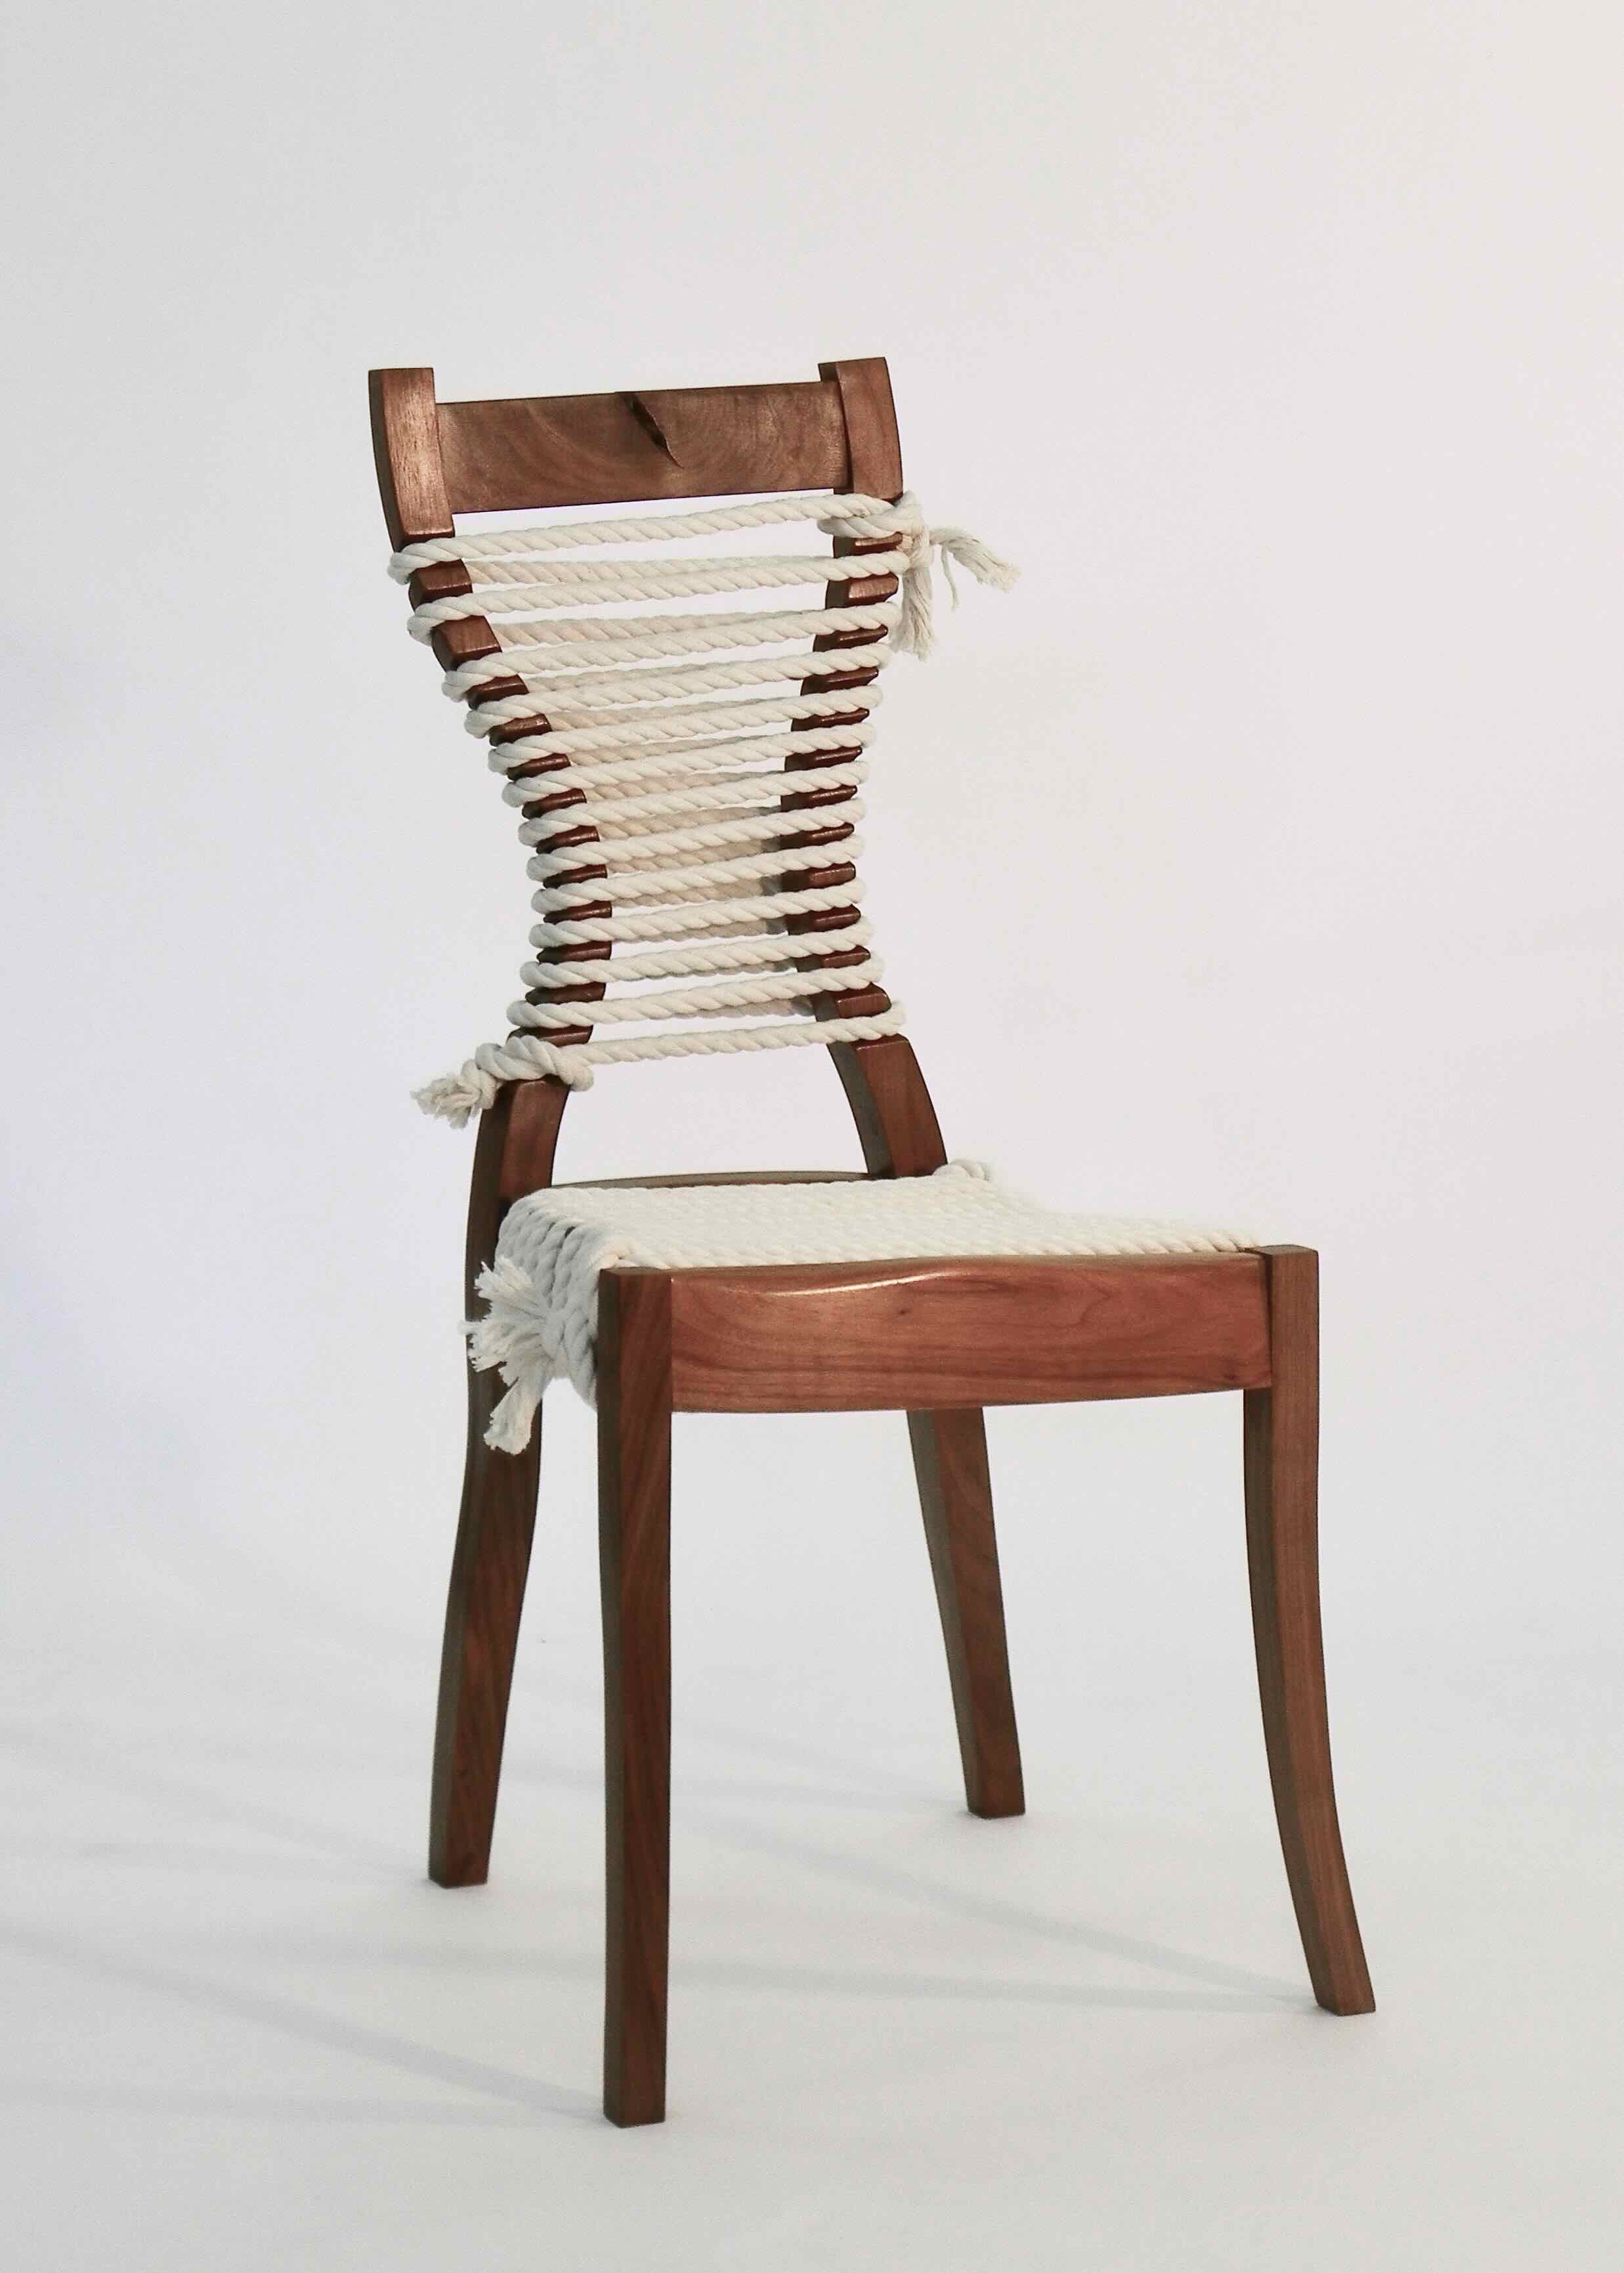 Tortured chair